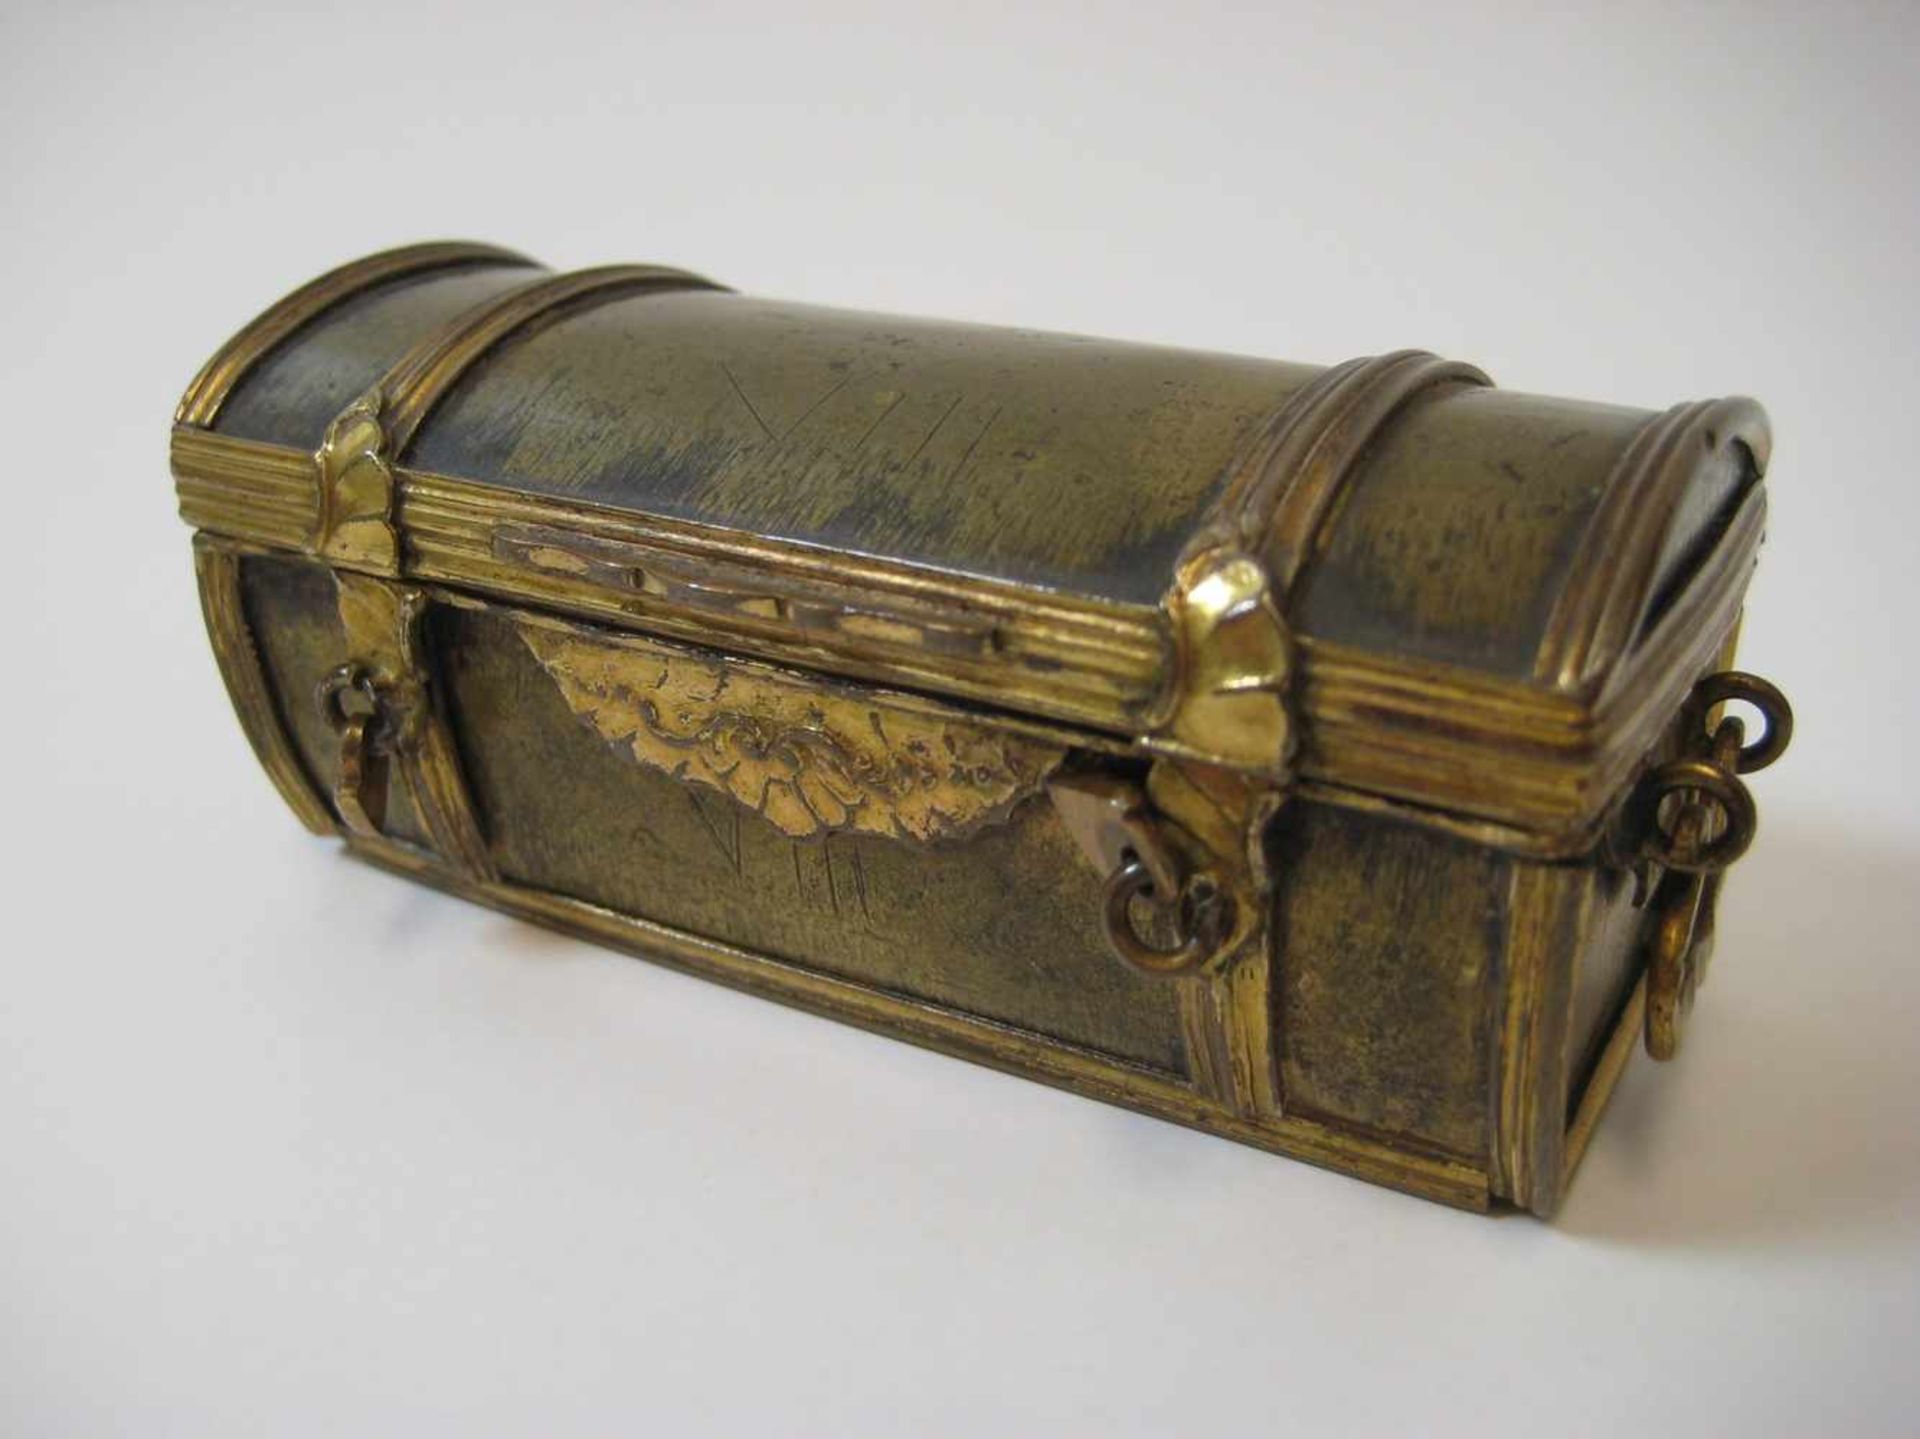 Miniatur-Truhe, 18. Jahrhundert, Metall mit Feuervergoldung, 3,3 x 8 x 4 cm.- - -19.00 % buyer's